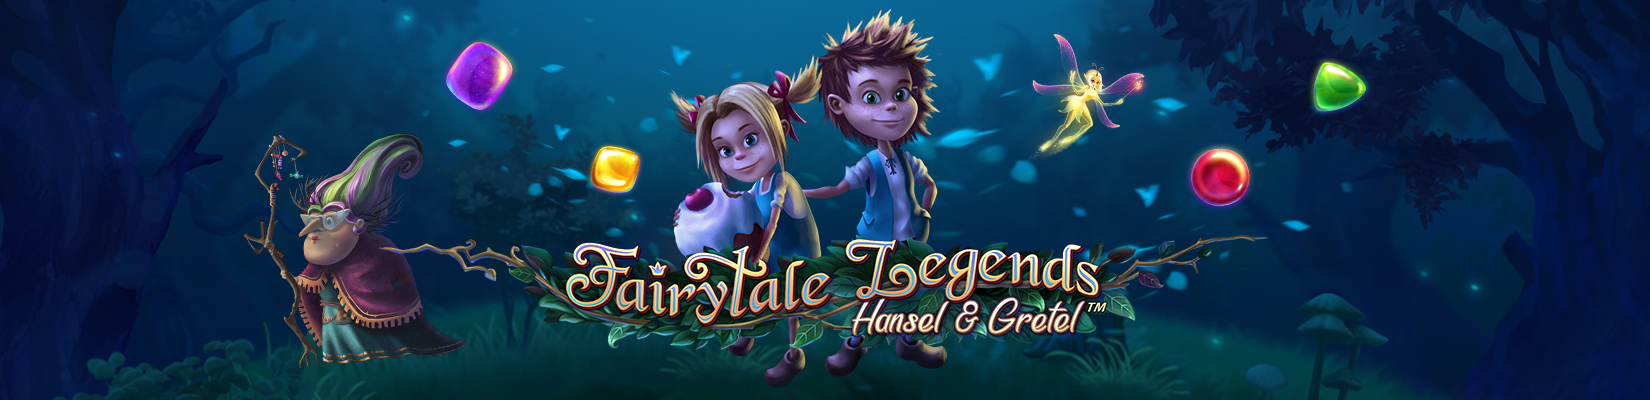 Game Release – Fairytale Legends: Hansel & Gretel™